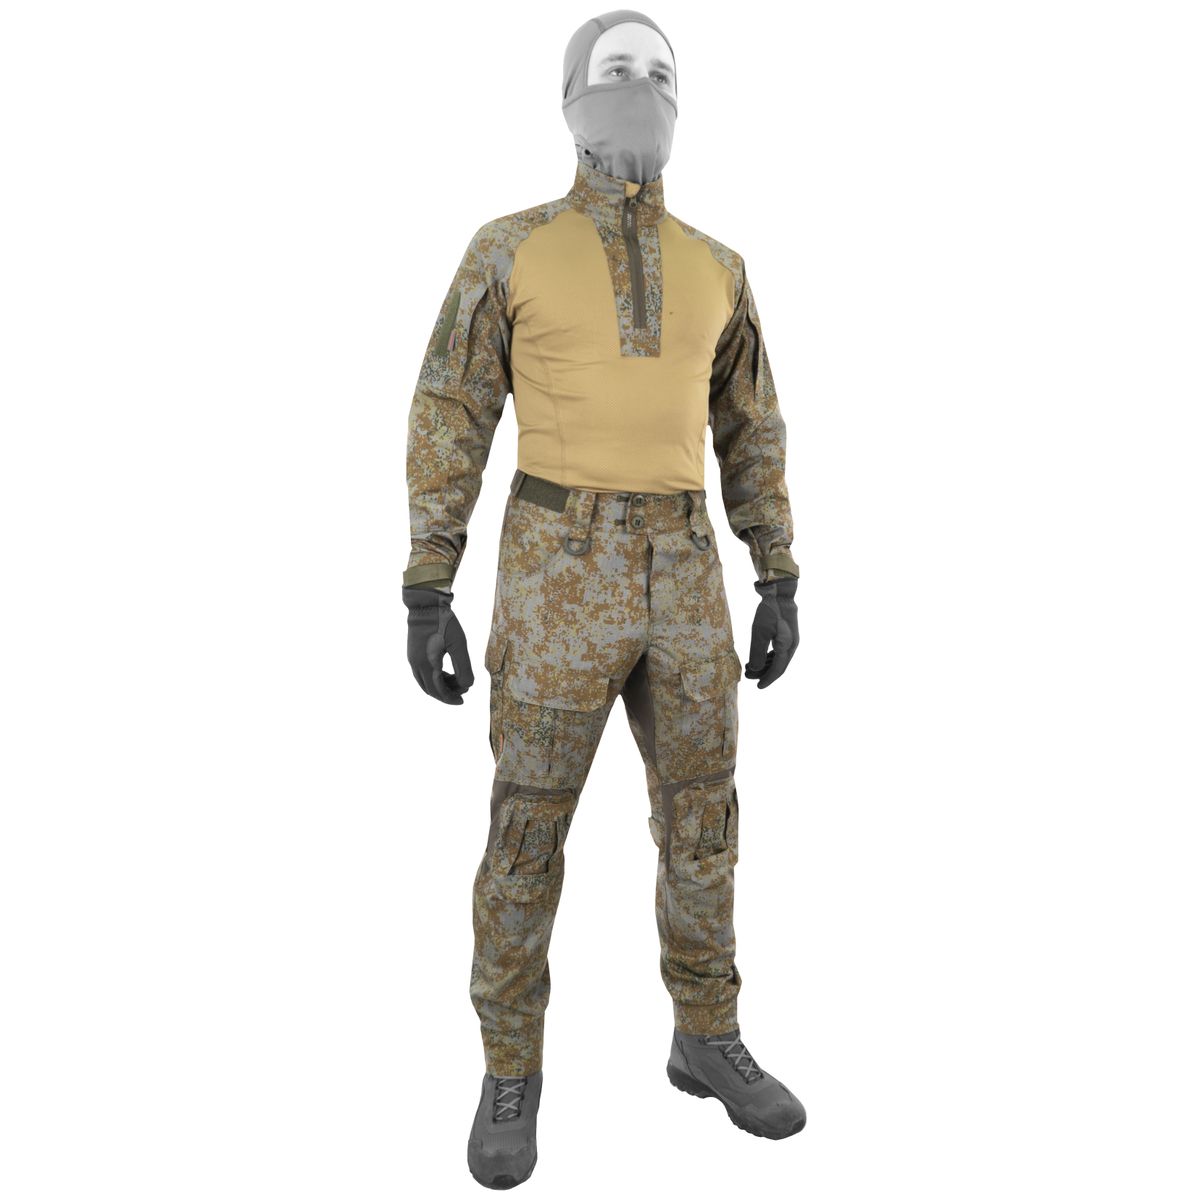 Combat suit Ratnik